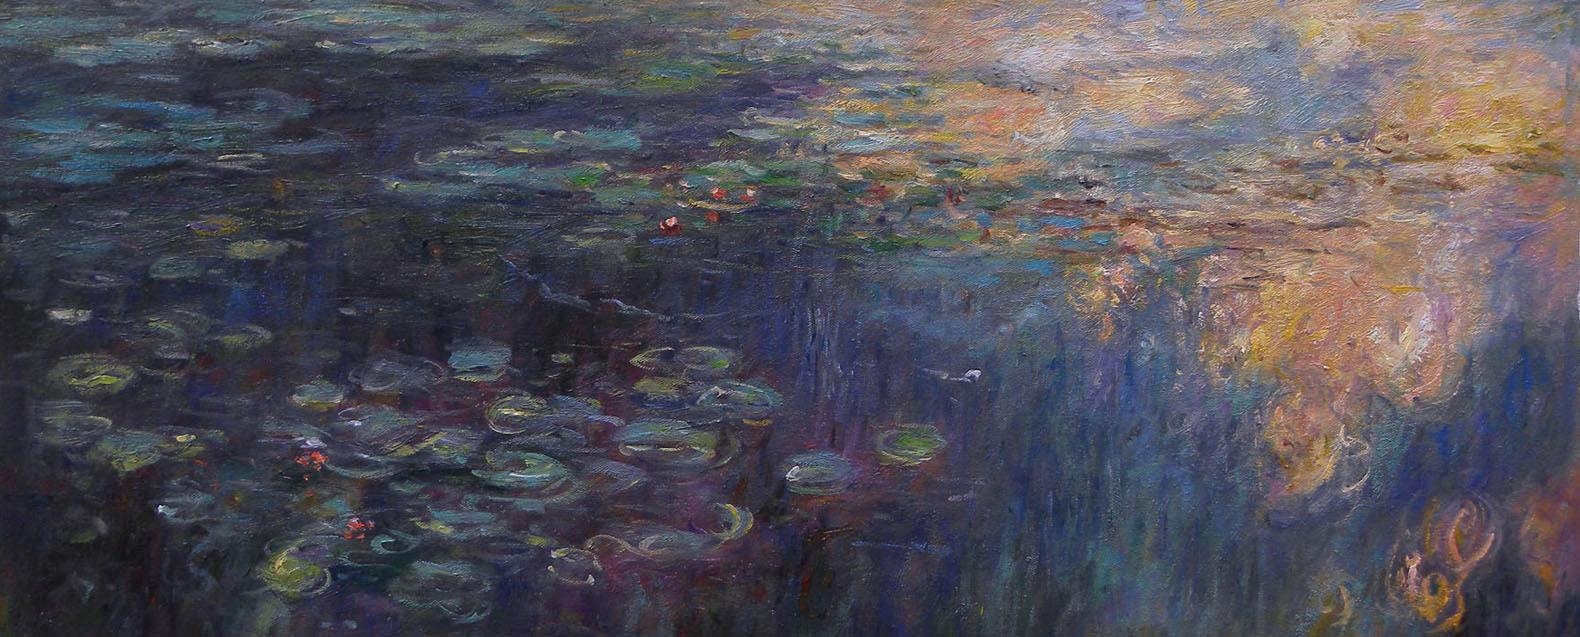 Claude+Monet-1840-1926 (608).jpg